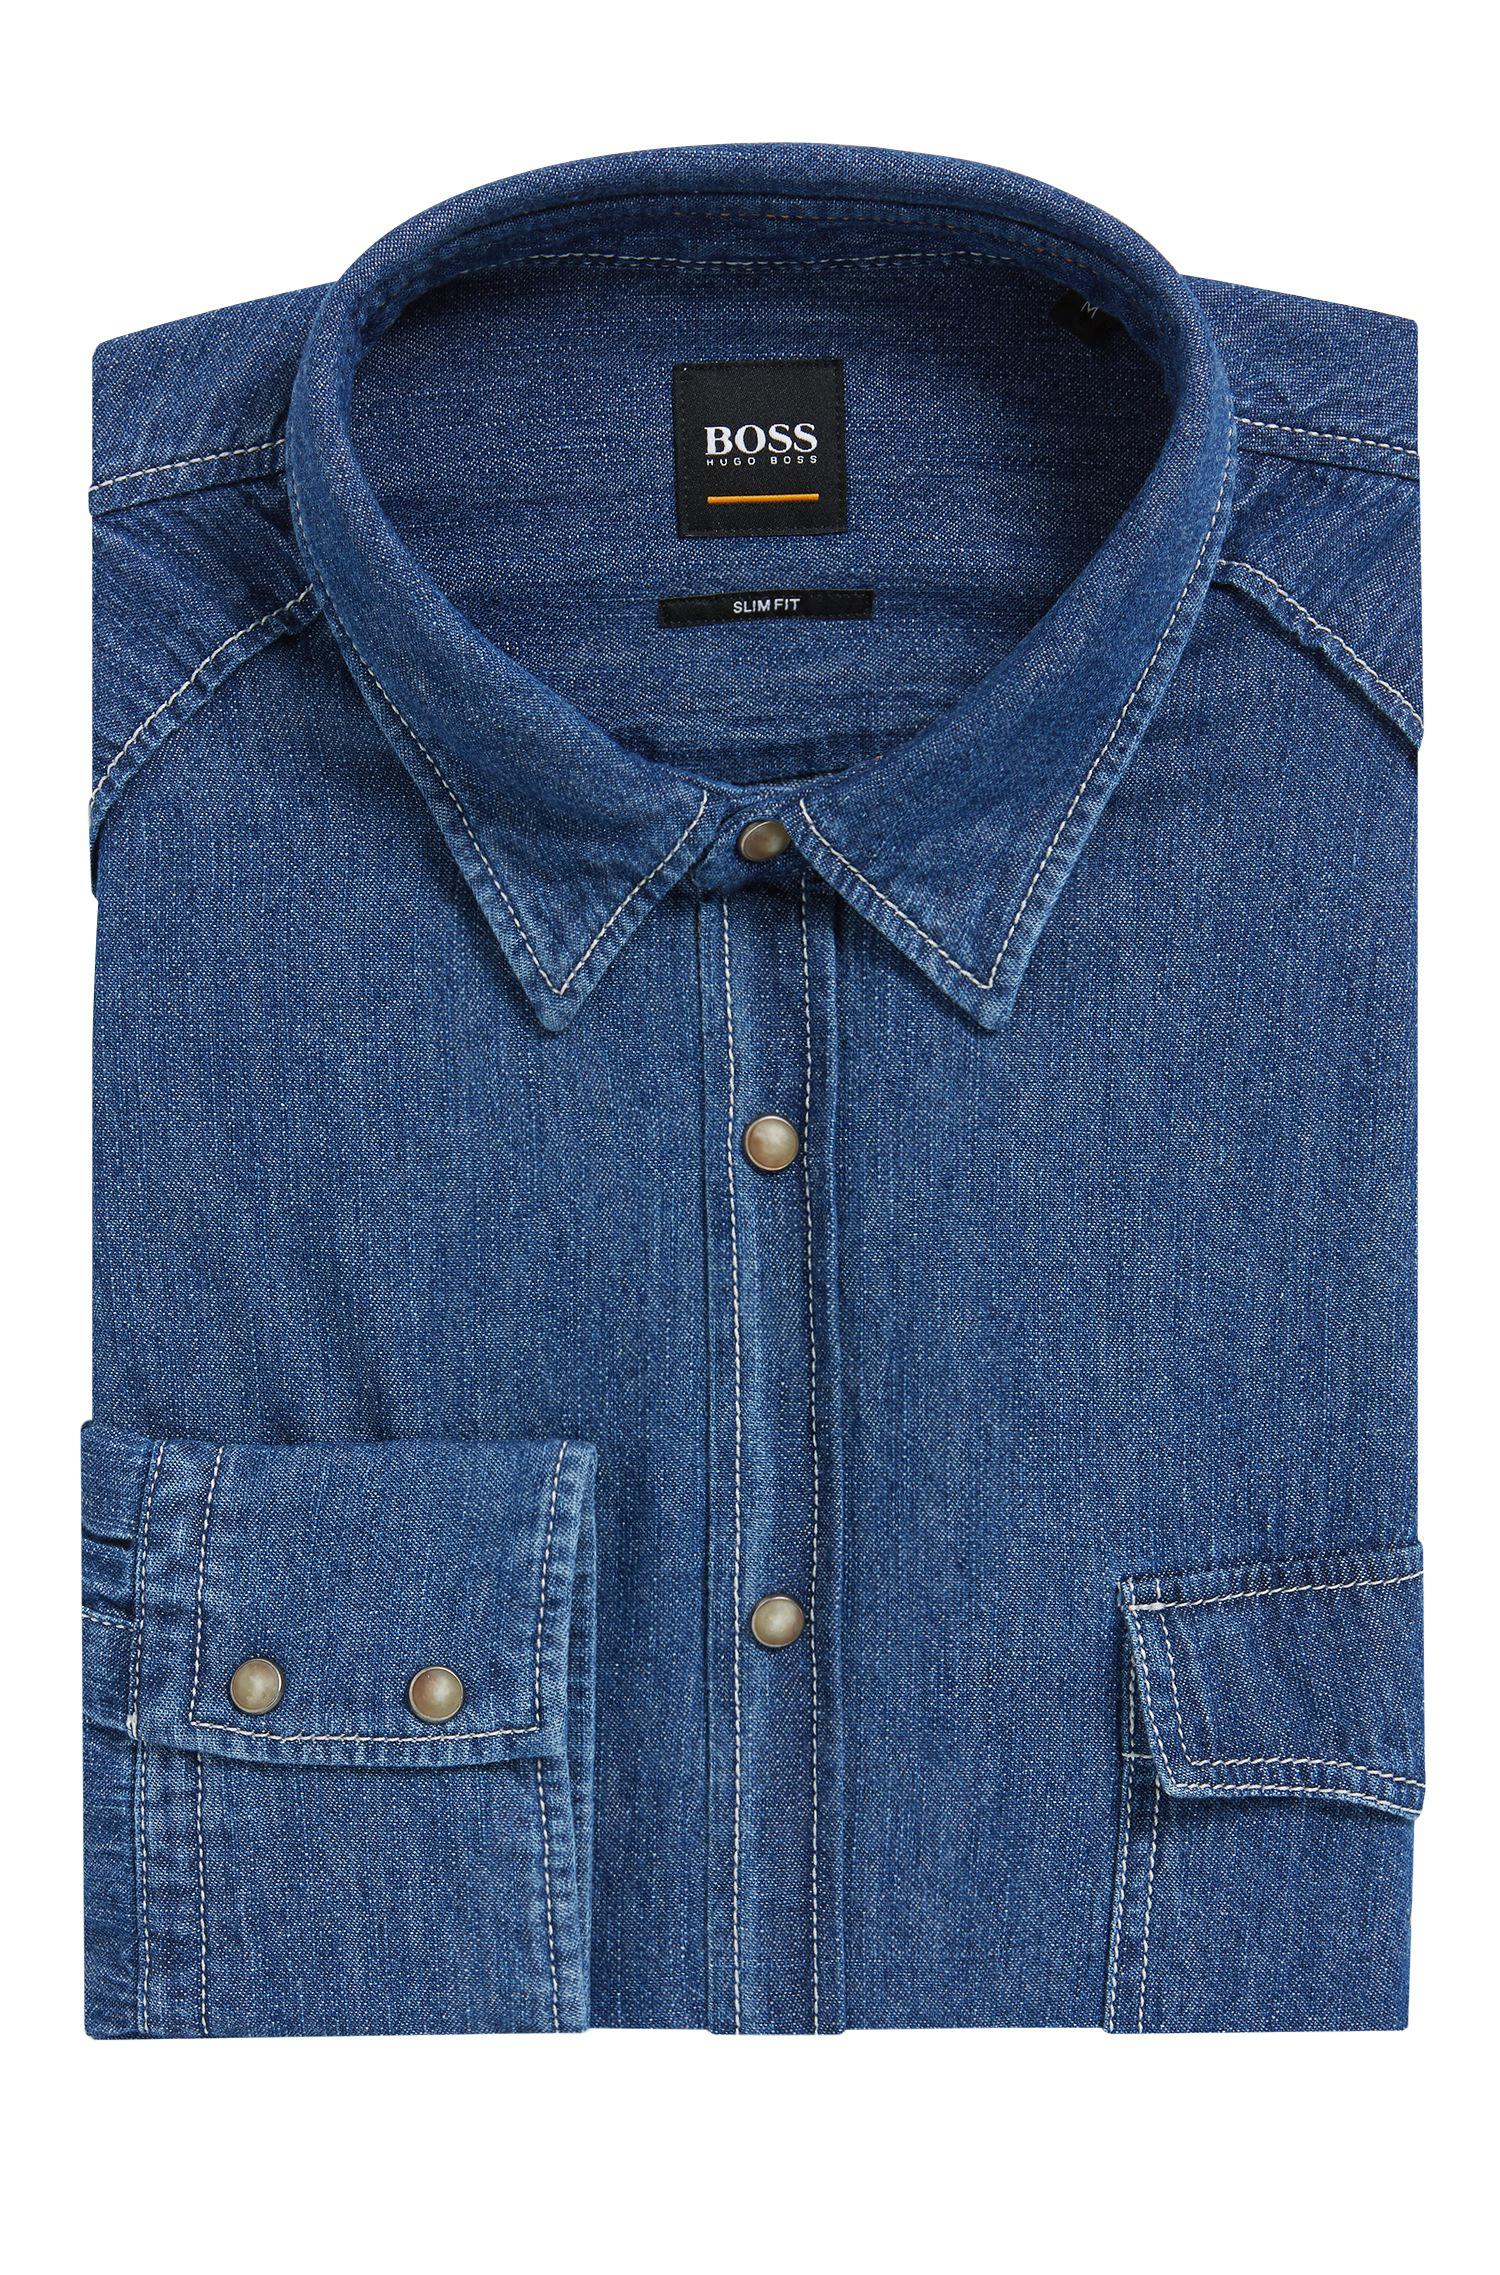 BOSS by HUGO BOSS Slim-fit Western-style Denim Shirt in Dark Blue (Blue)  for Men - Lyst